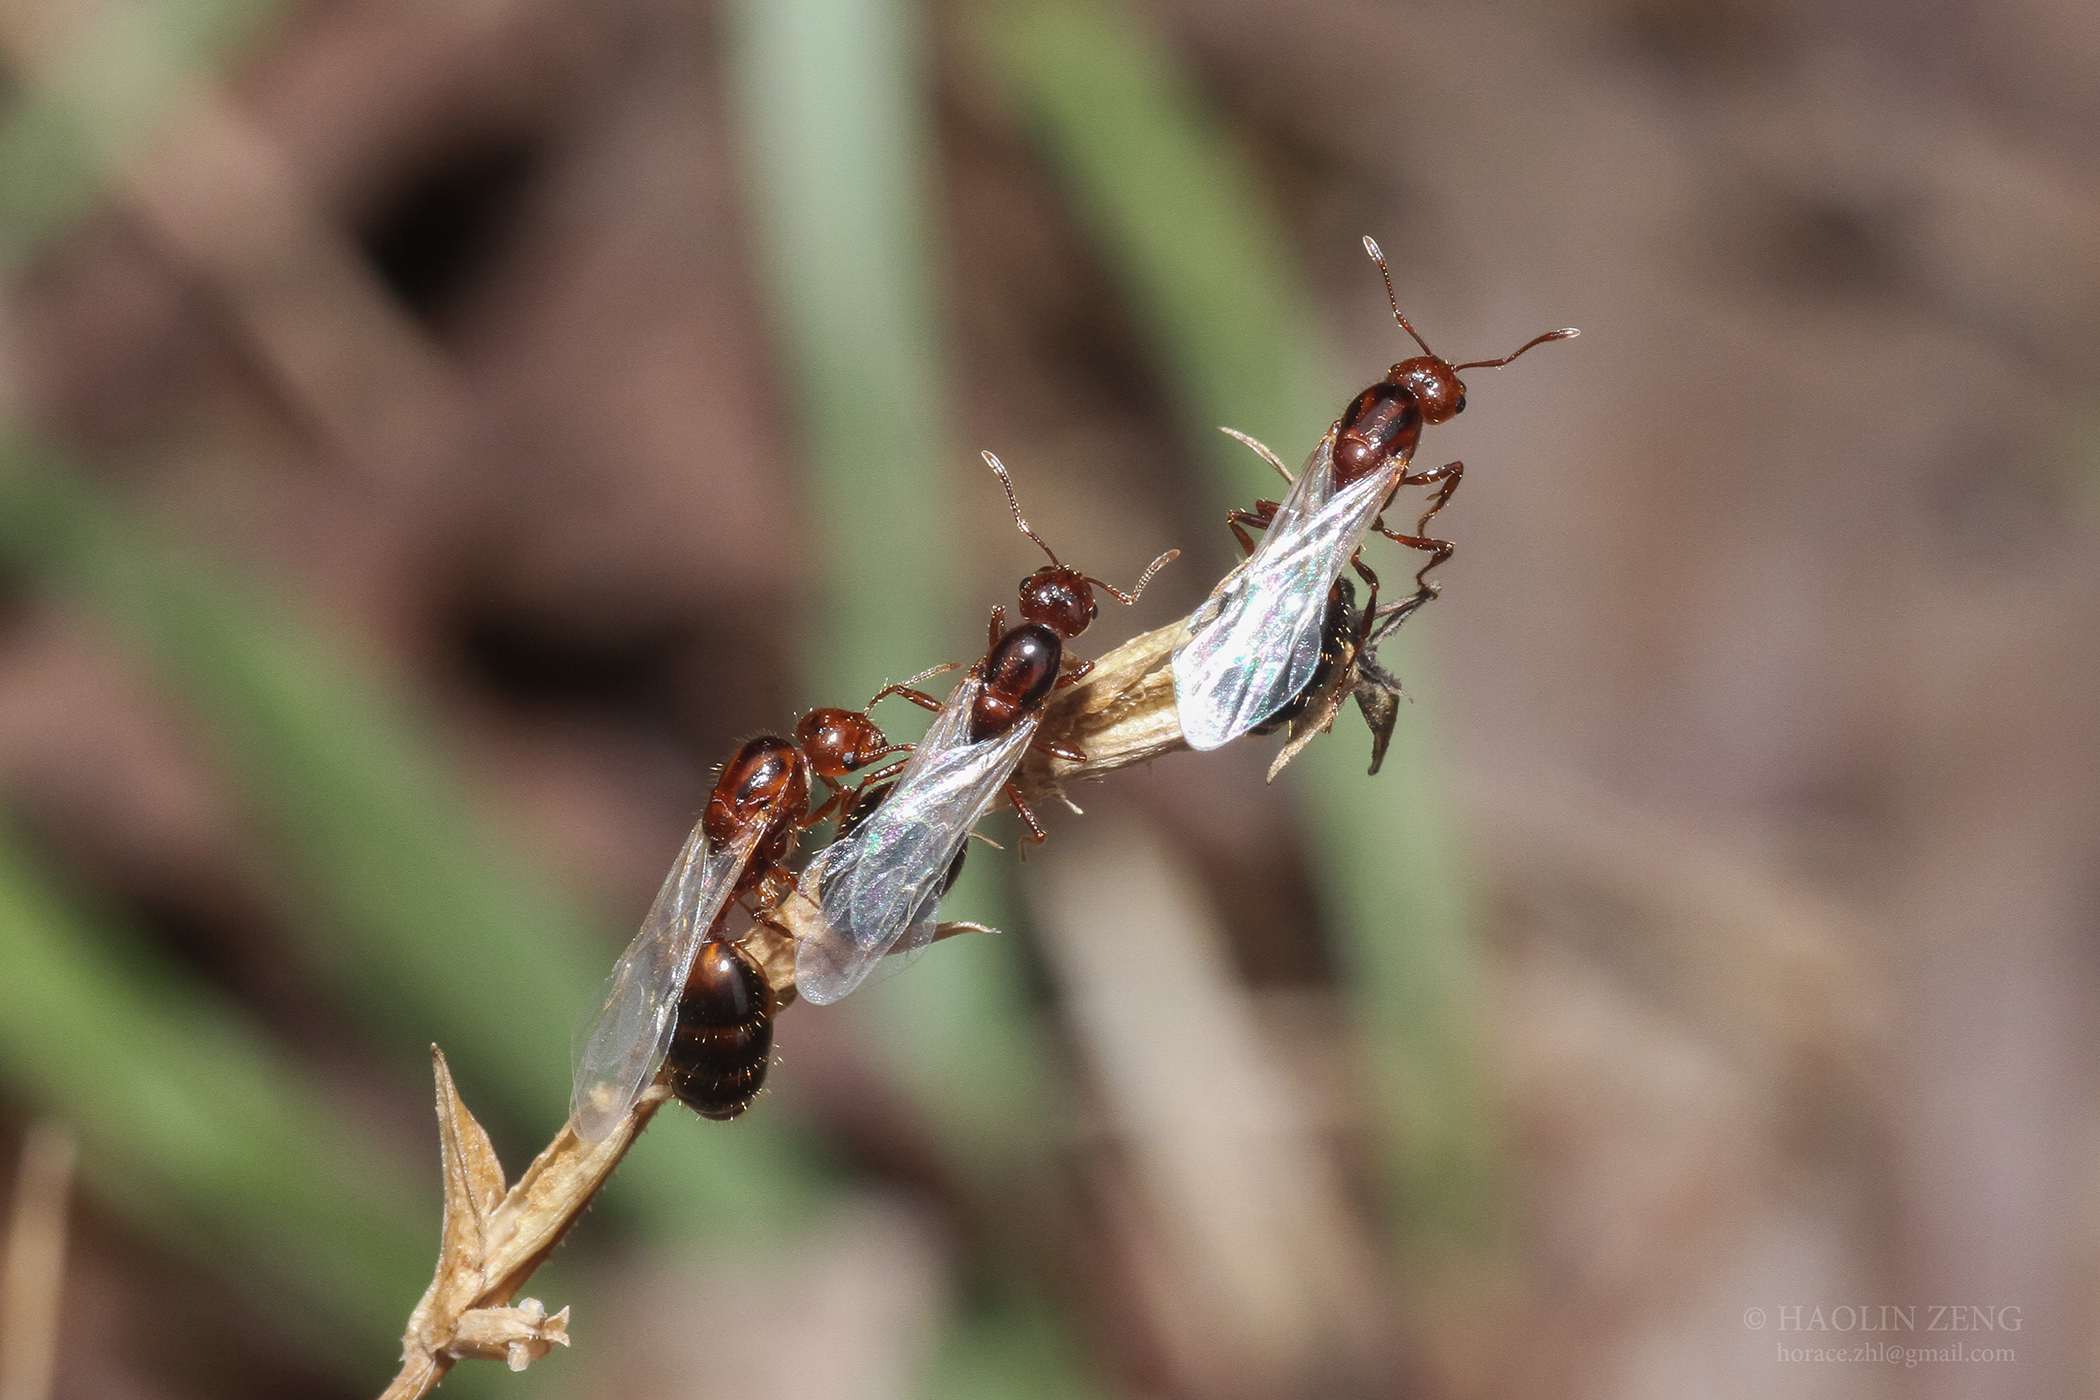 Крылатых муравьев. Огненные муравьи (Solenopsis Invicta). Полет муравьев. Брачный полет муравьев. Летучие муравьи.